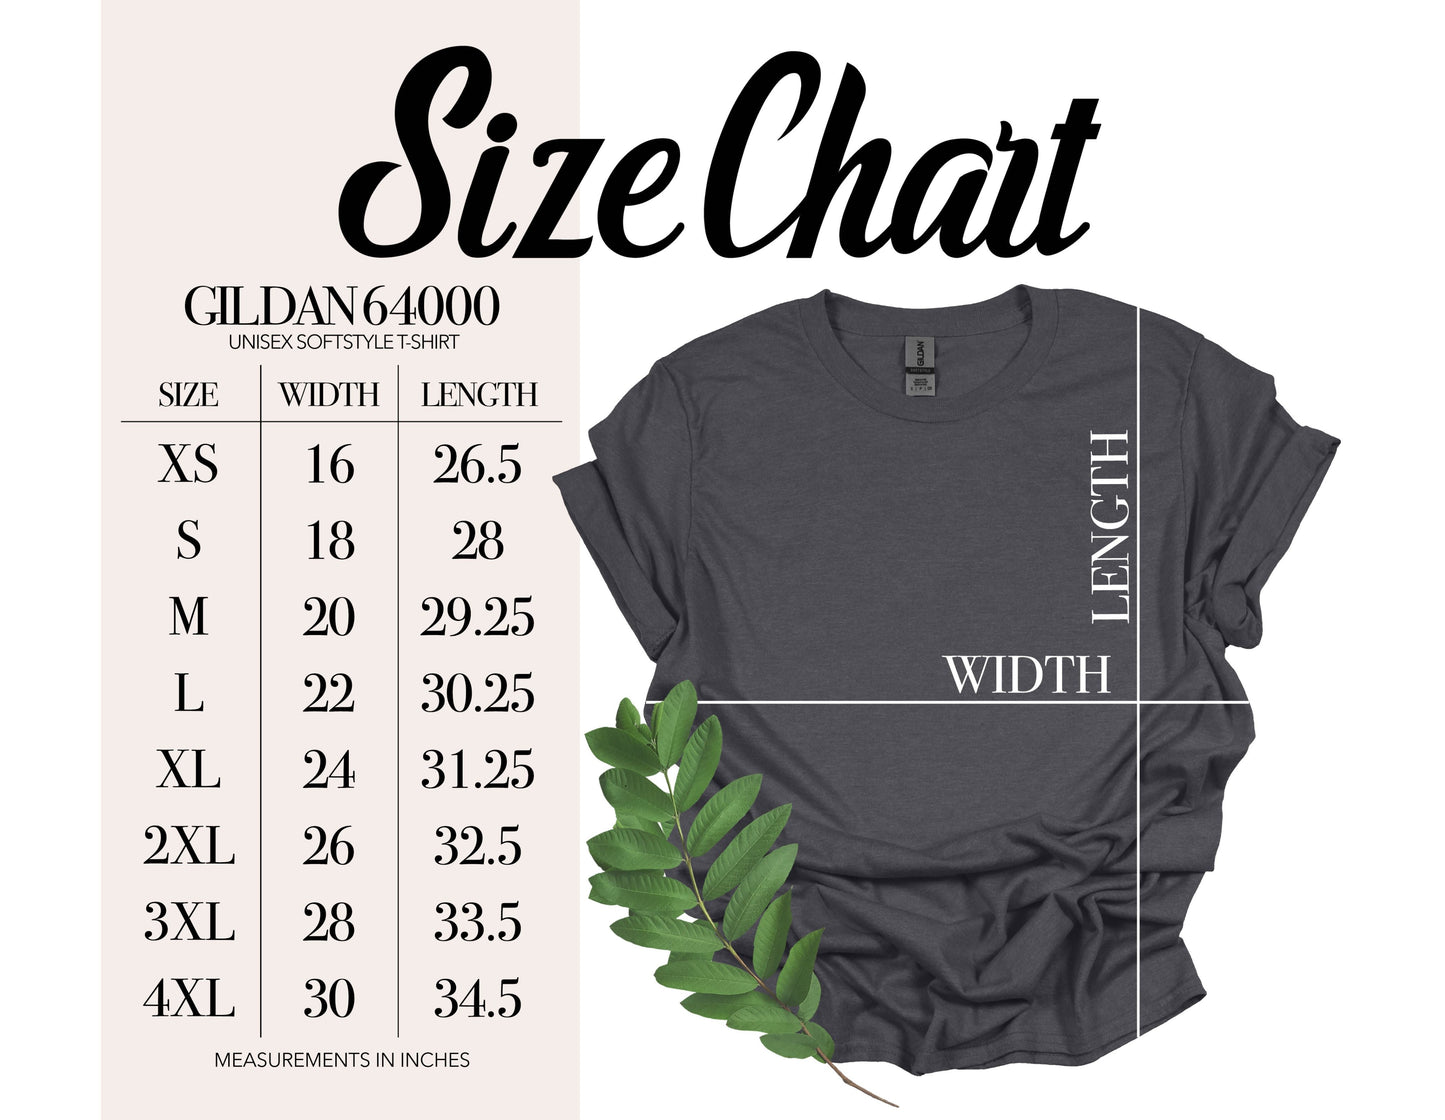 NOTE TO SELF T-SHIRT - Premium T-Shirt from Ninez Designz Custom Creations LLC - Just $20! Shop now at Ninez Designz